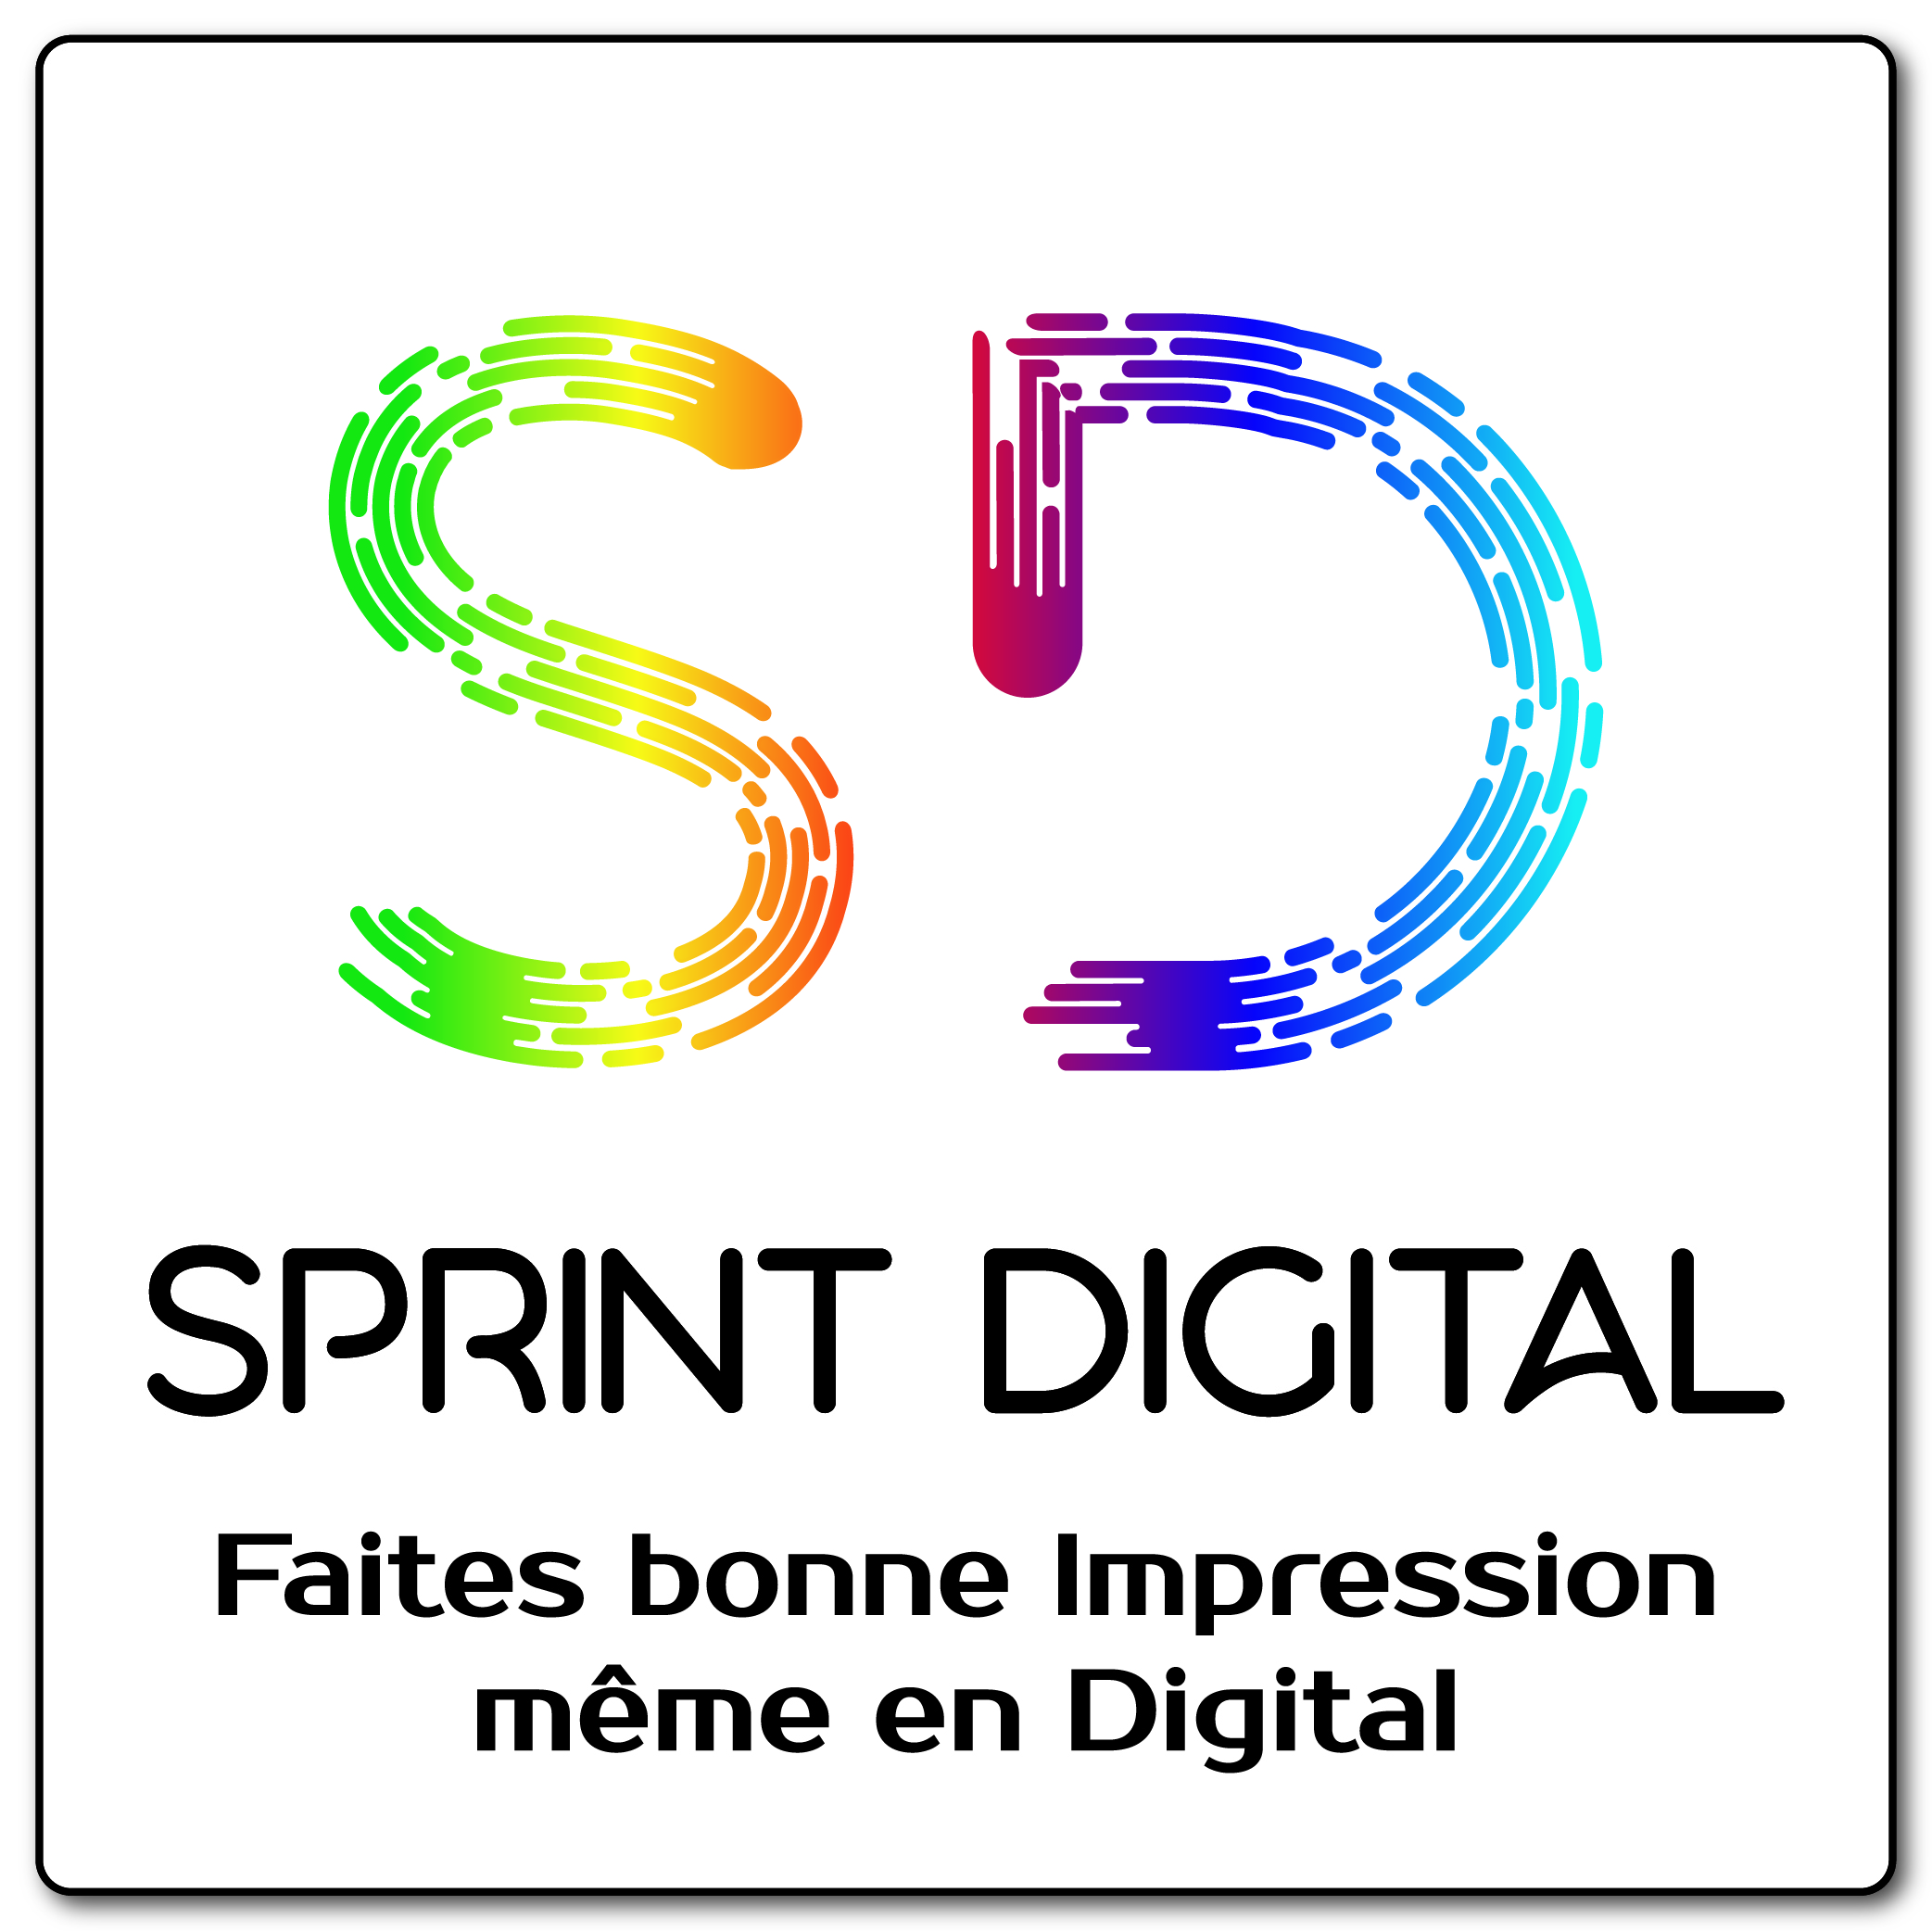 Sprint Digital - Faites Bonne Impression même en Digital